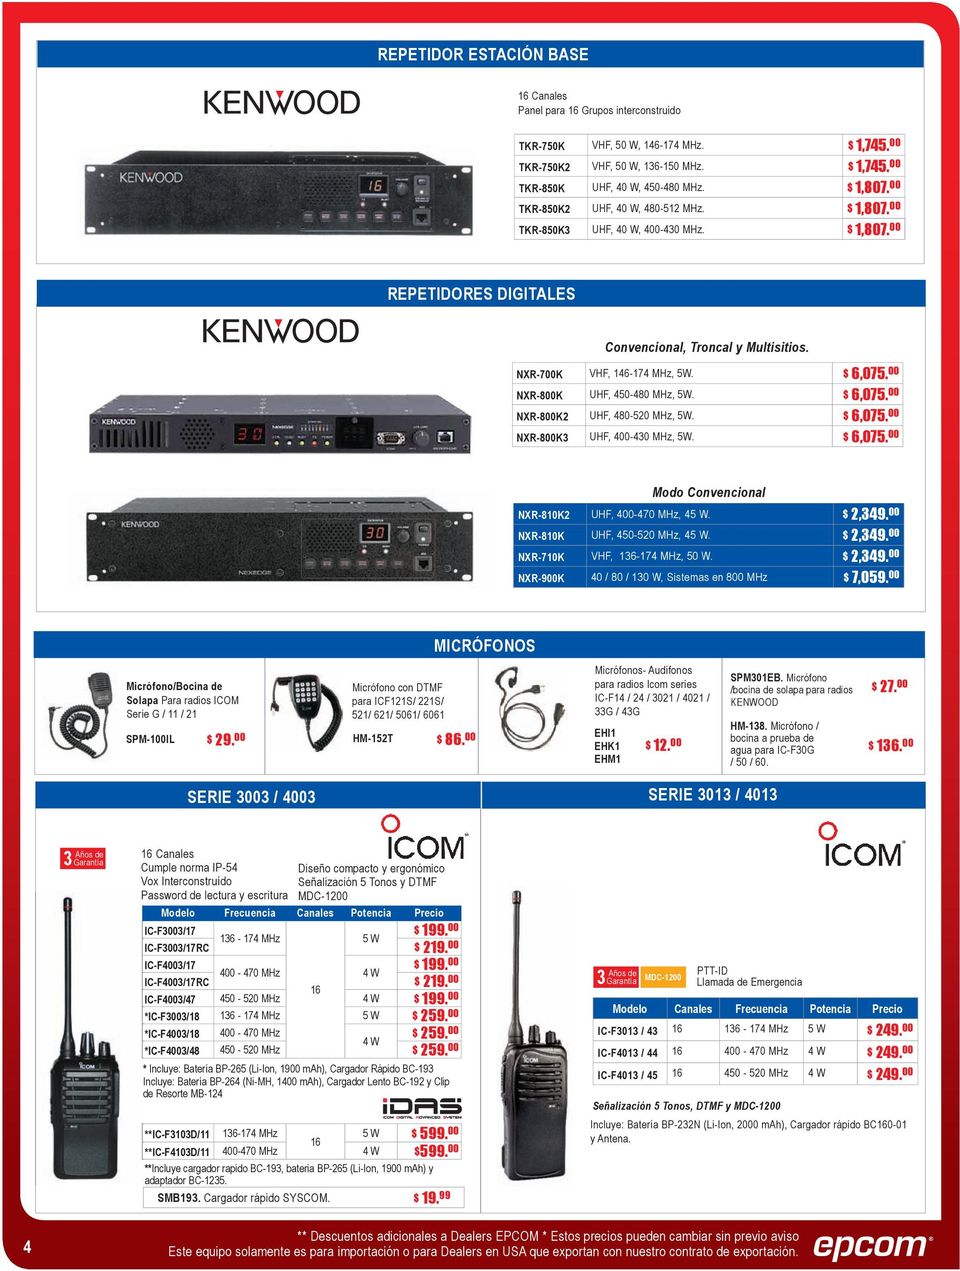 $ 6,075. 00 NXR-800K UHF, 450-480 MHz, 5W. $ 6,075. 00 NXR-800K2 UHF, 480-520 MHz, 5W. $ 6,075. 00 NXR-800K3 UHF, 400-430 MHz, 5W. $ 6,075. 00 Modo Convencional NXR-810K2 UHF, 400-470 MHz, 45 W.